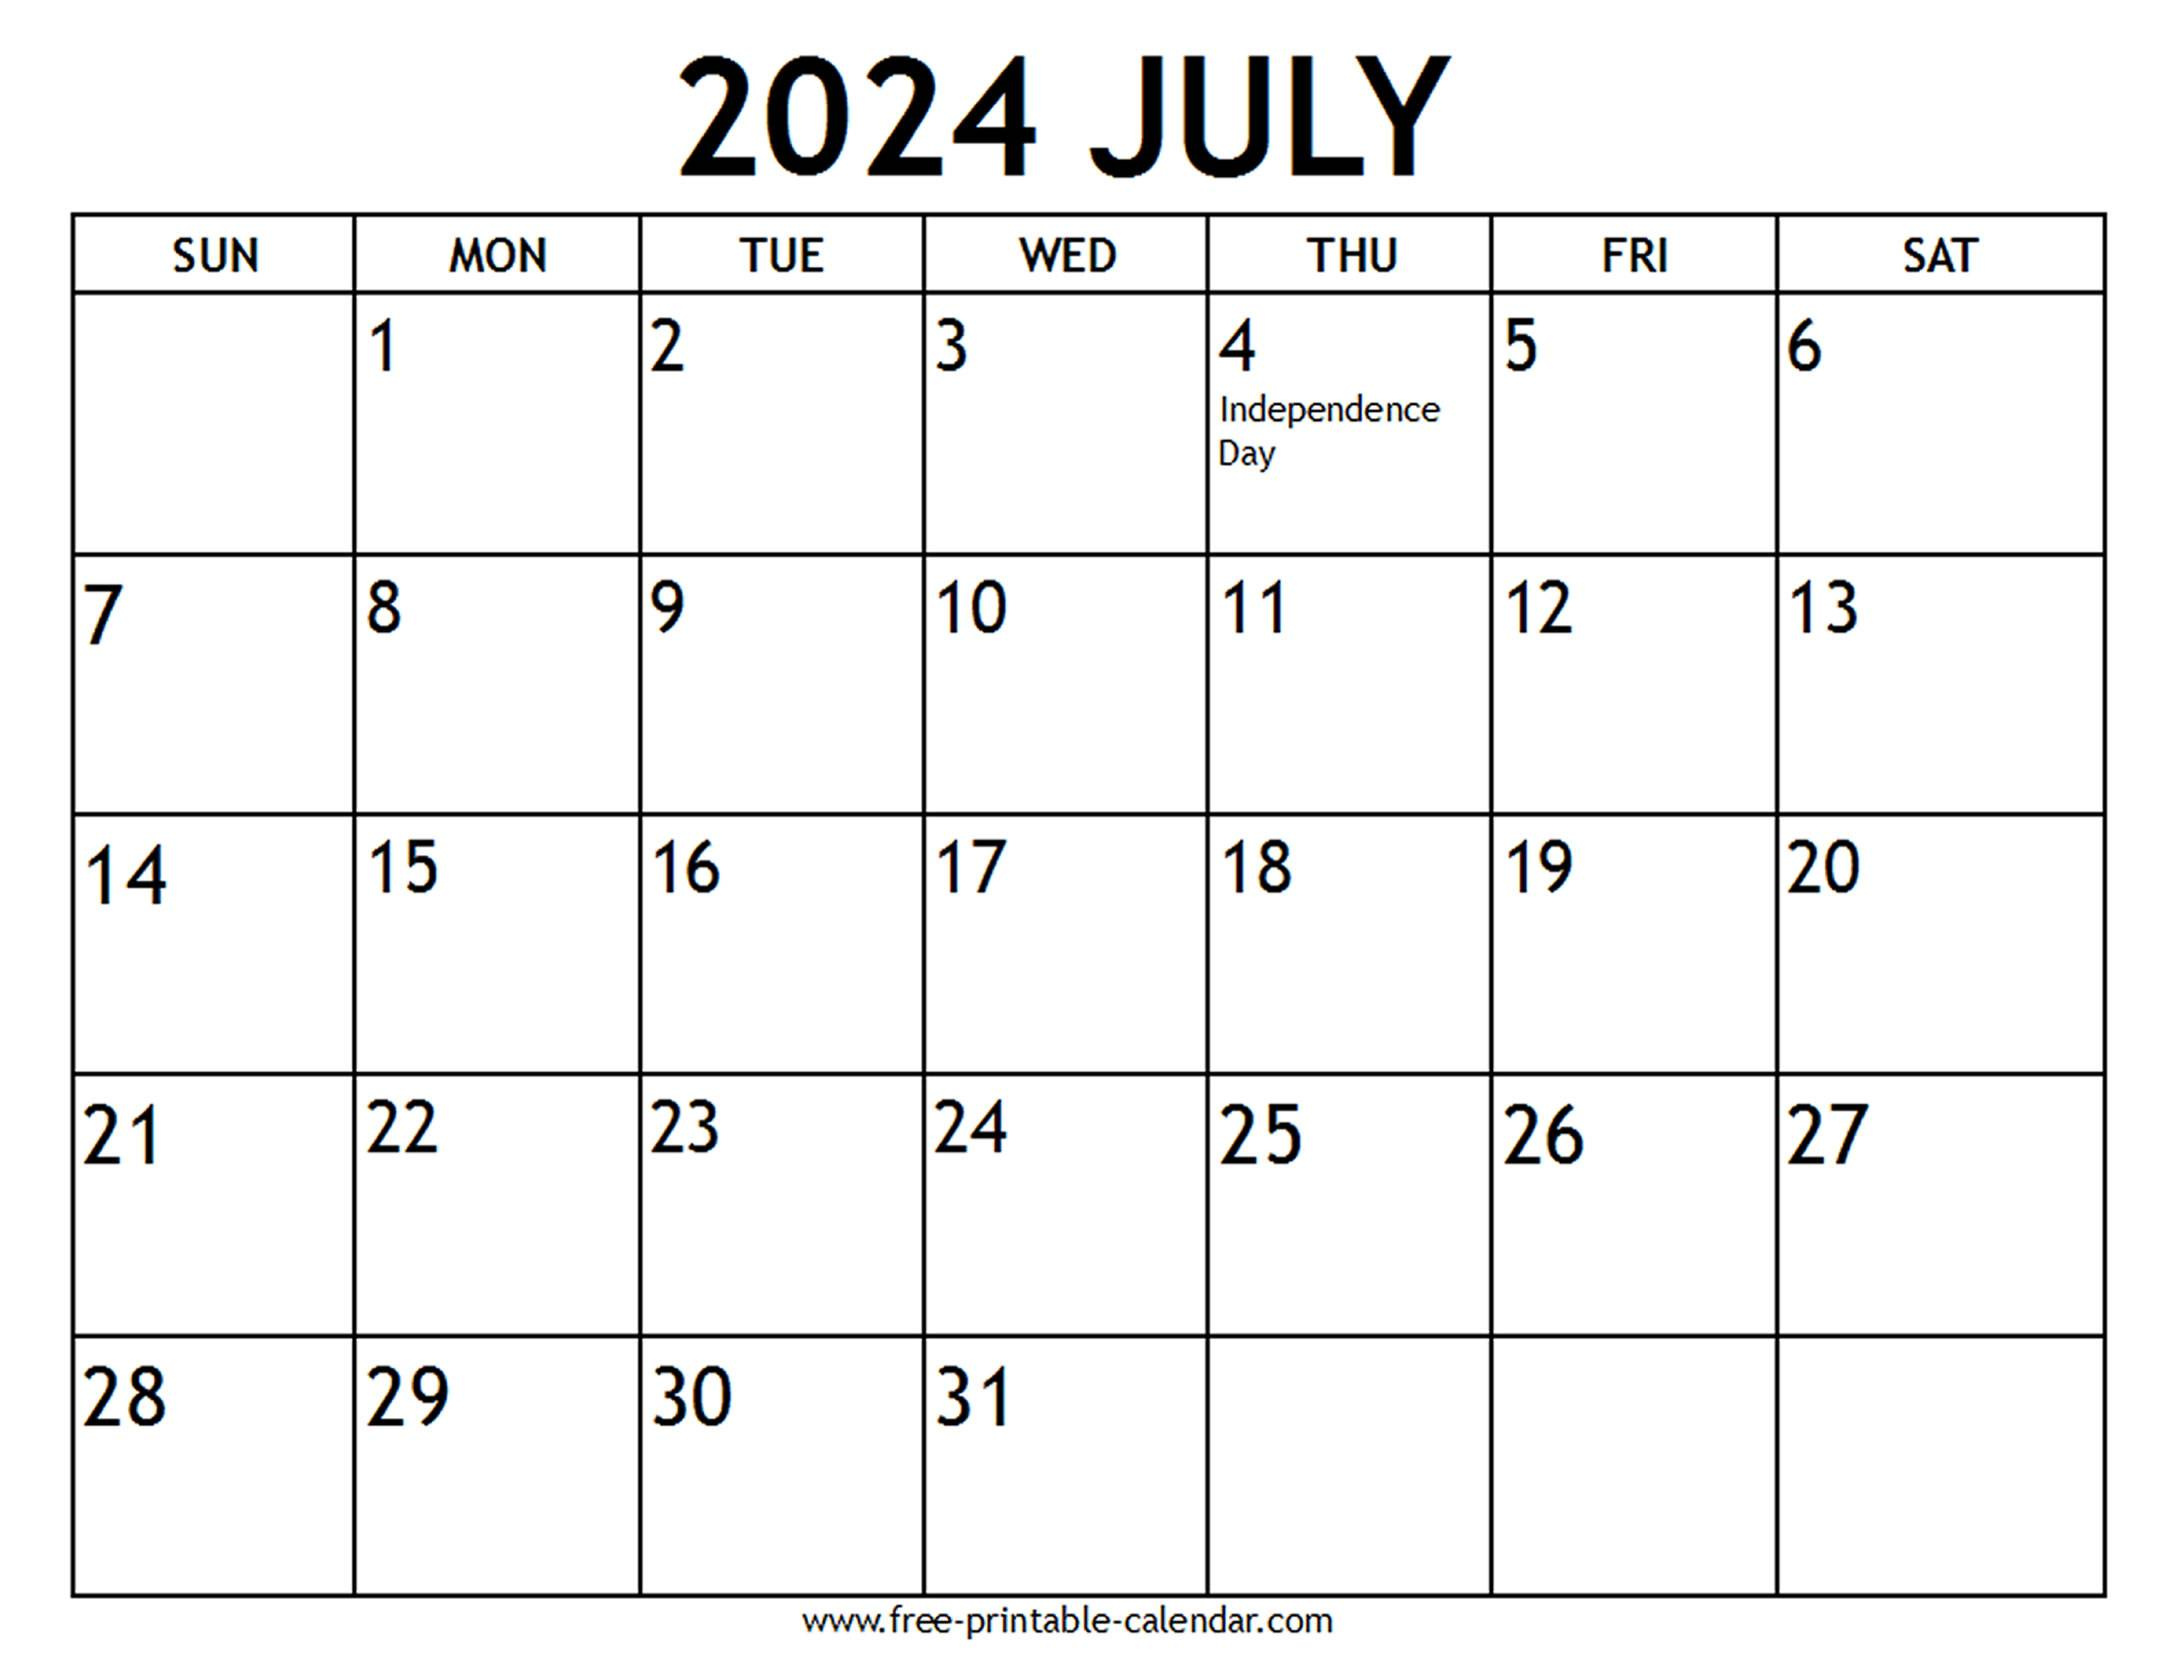 July 2024 Calendar Us Holidays - Free-Printable-Calendar inside July 2024 Printable Calendar With Holidays